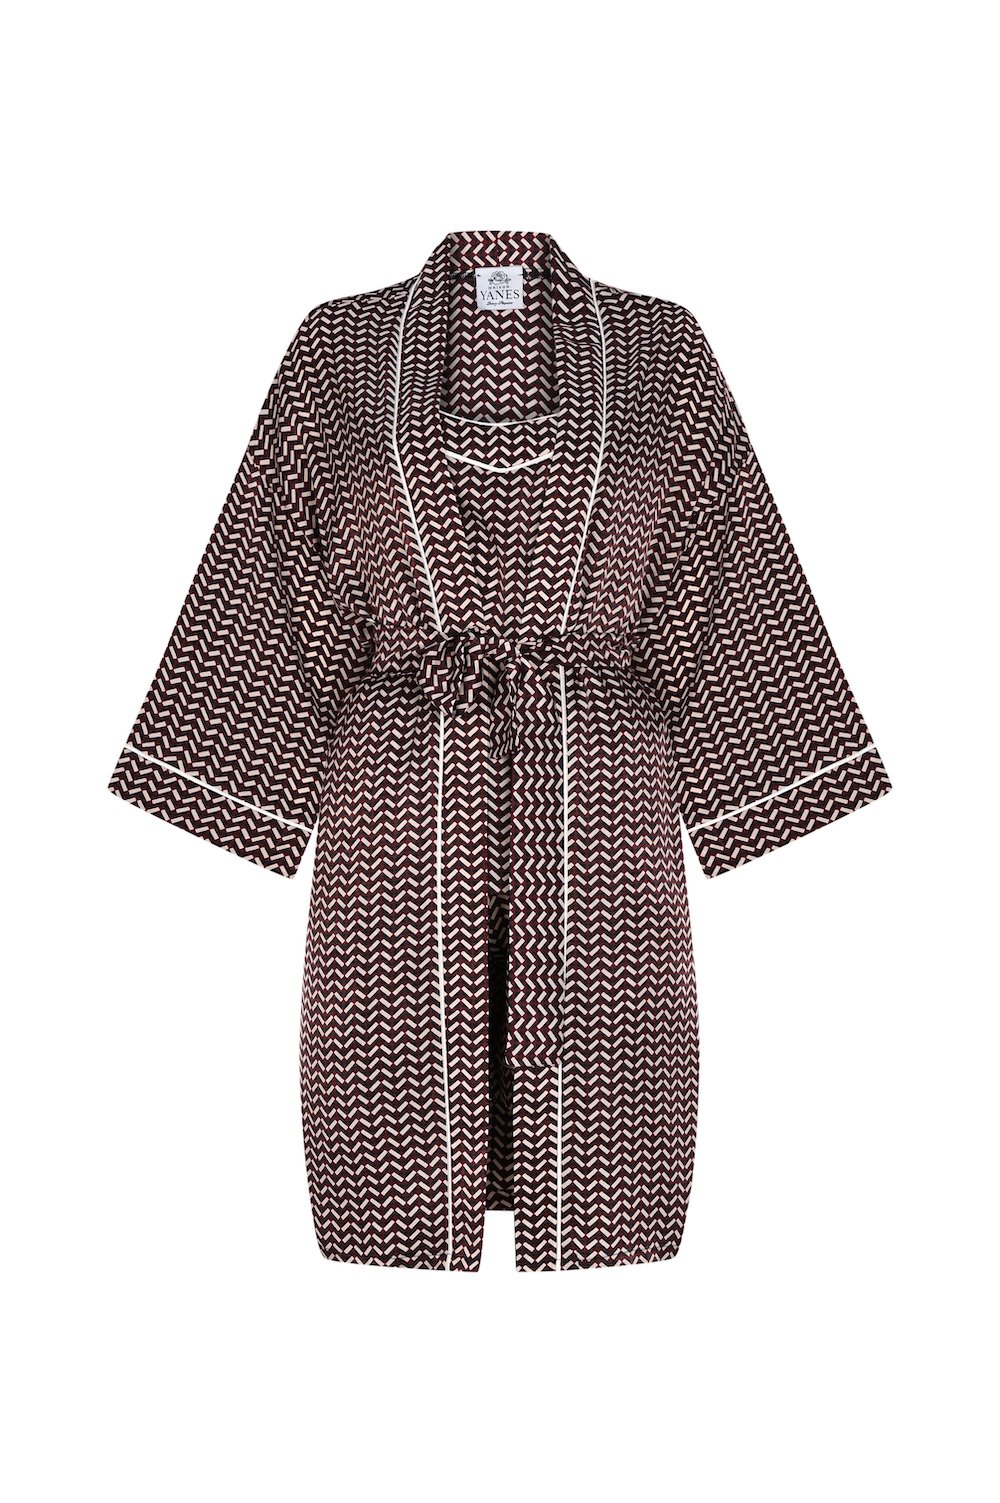 Santorini Women's Special Shorts Pajama Set